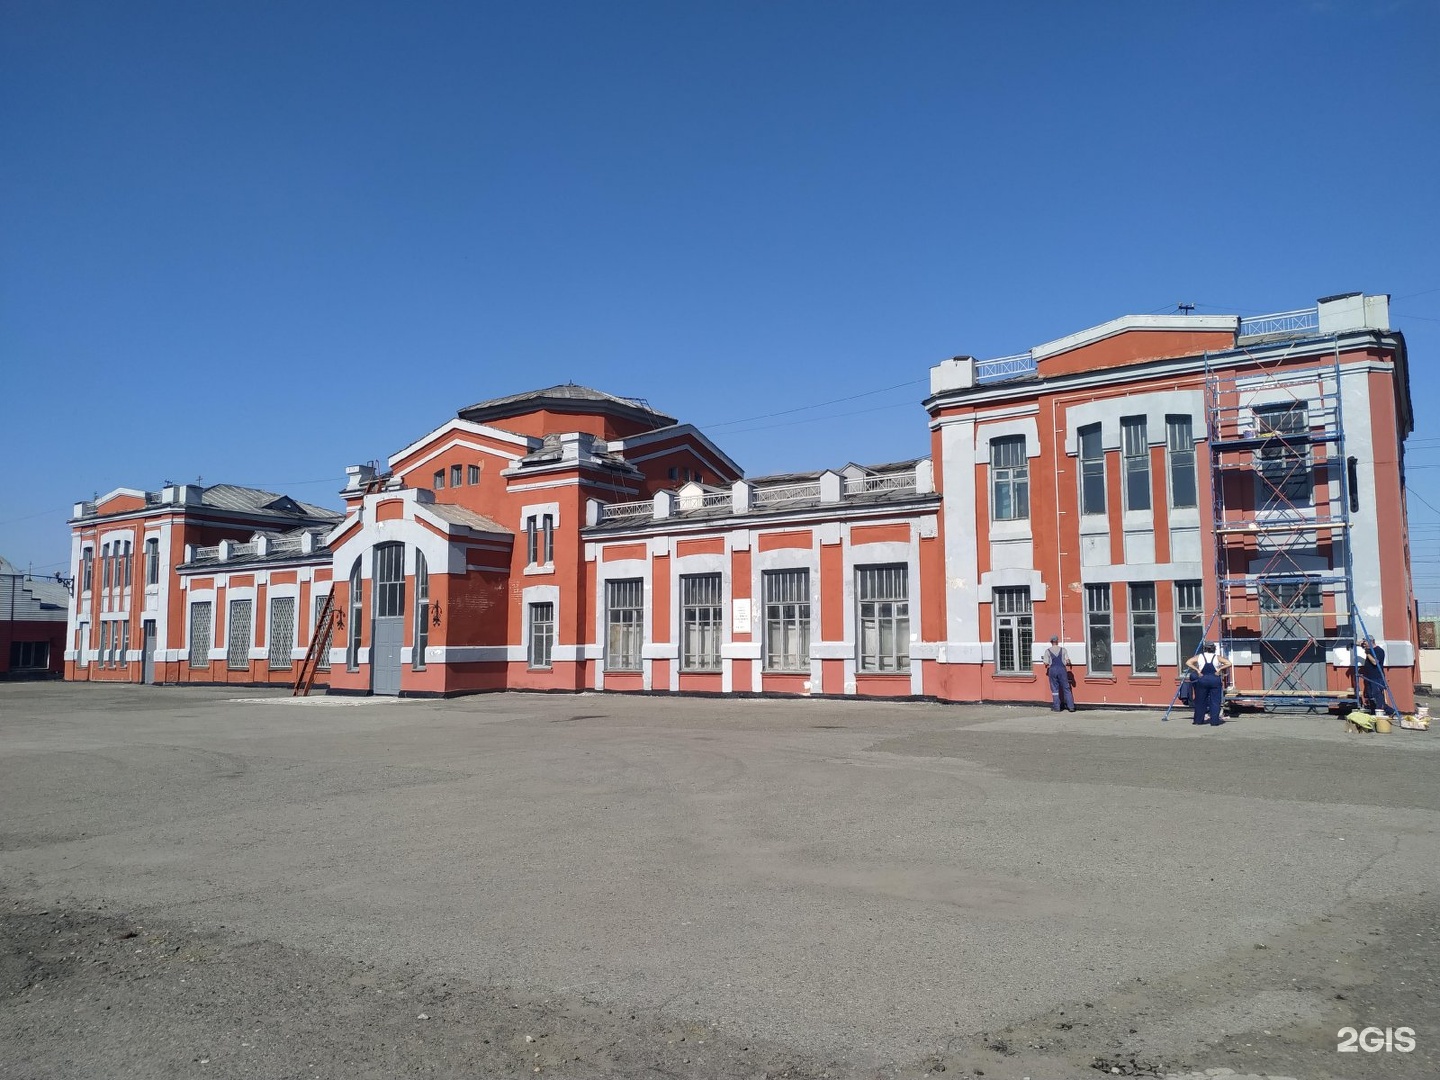 Жд вокзал барнаул телефон. Здание вокзала Барнаул. Старое здание ЖД вокзала Барнаул. ЖД вокзал вокзал Барнаул. ЖД вокзал Барнаул 1915.